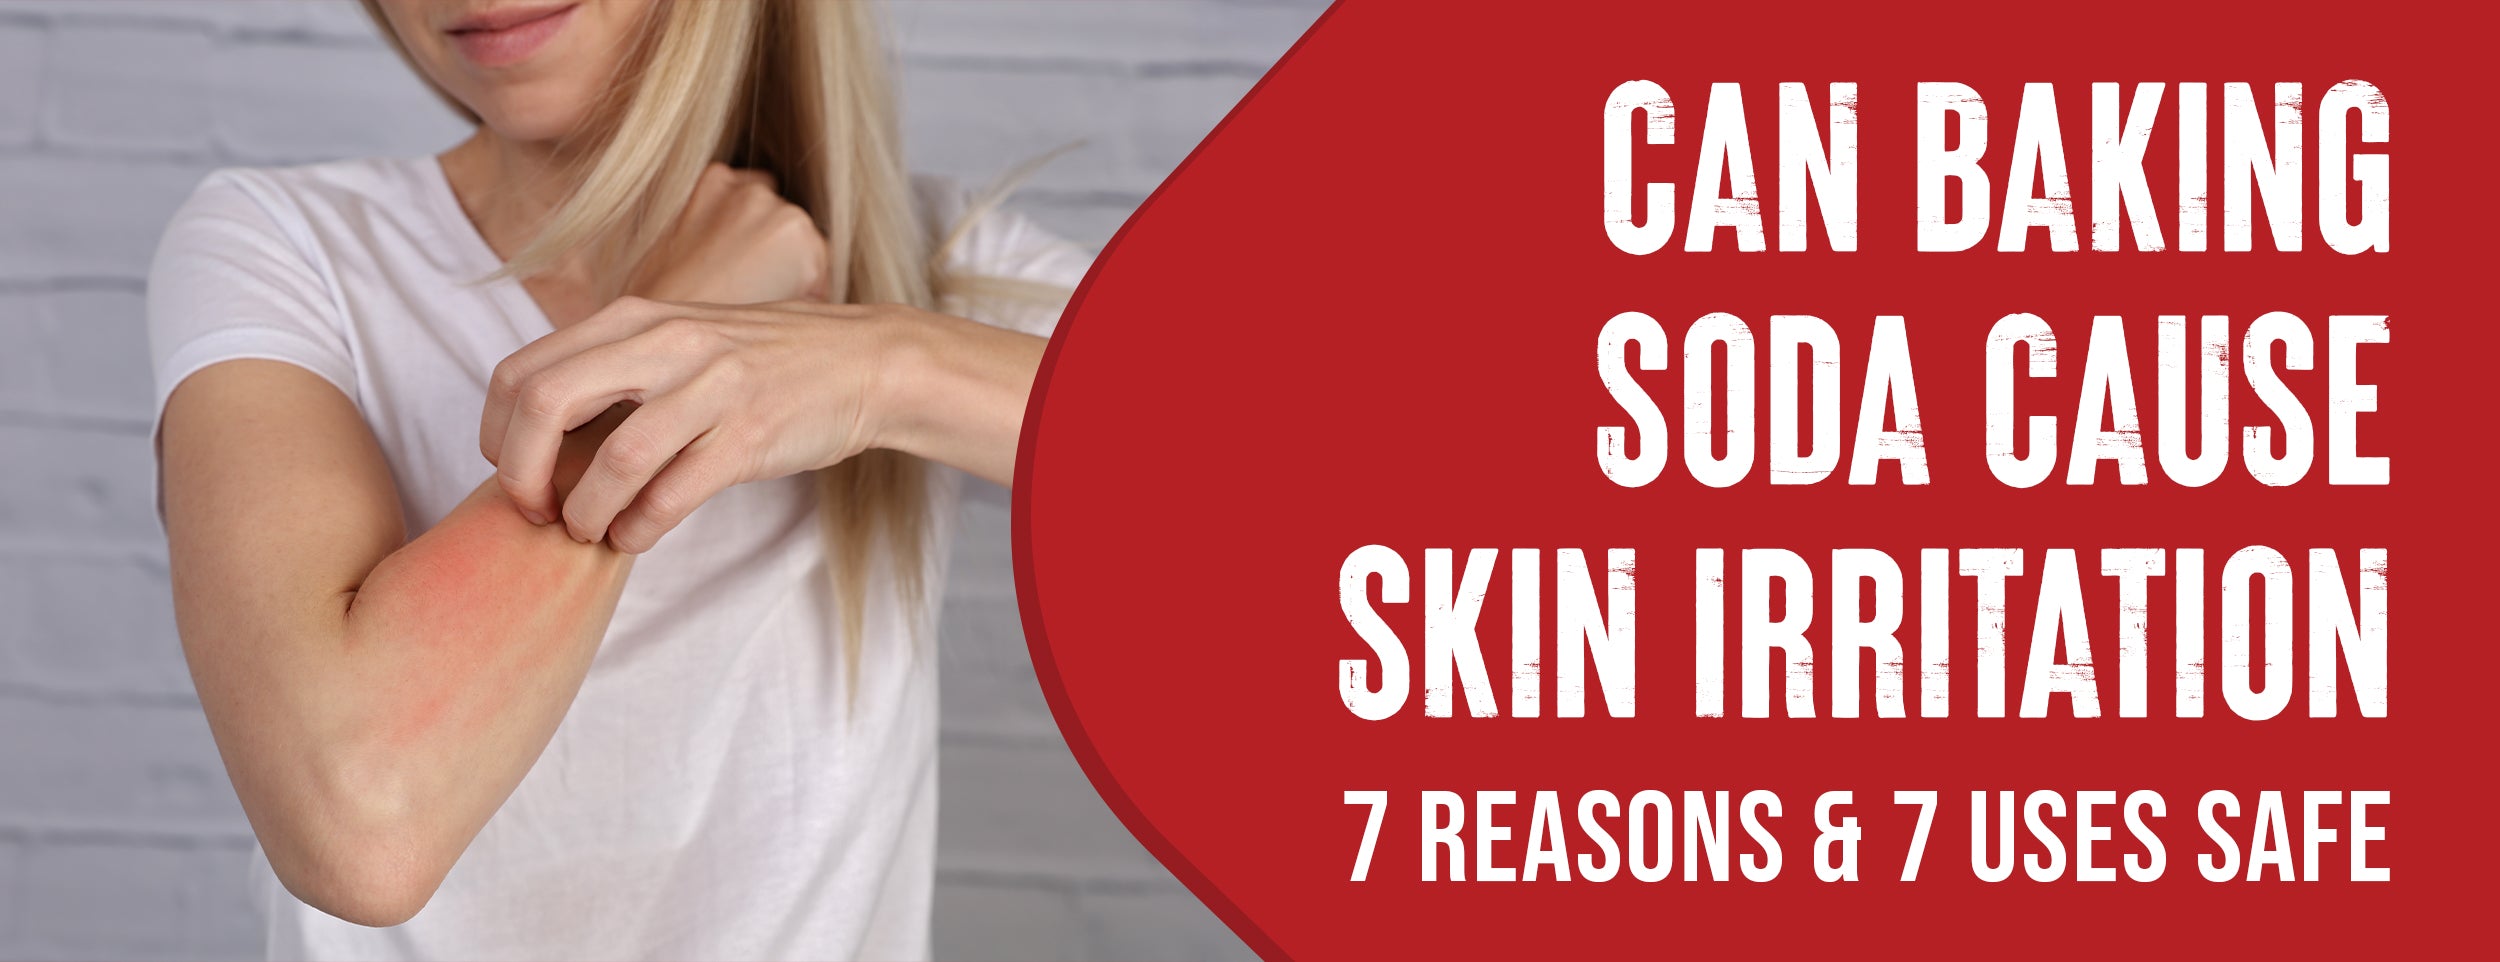 7 Reasons Why Baking Soda Causes Skin Irritation [7 Ways To Use It Safely]